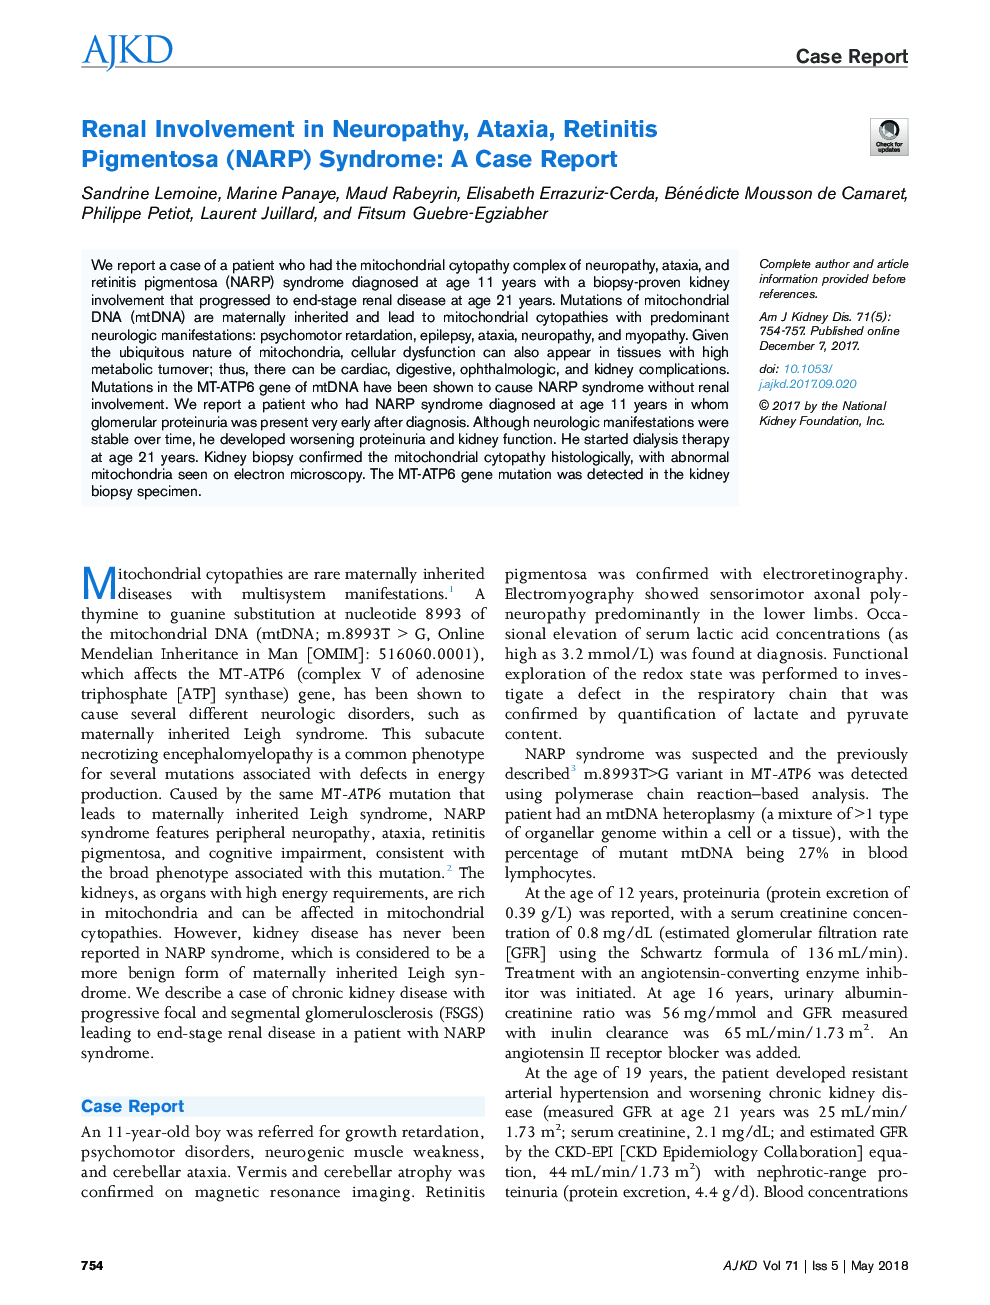 Renal Involvement in Neuropathy, Ataxia, Retinitis Pigmentosa (NARP) Syndrome: A Case Report